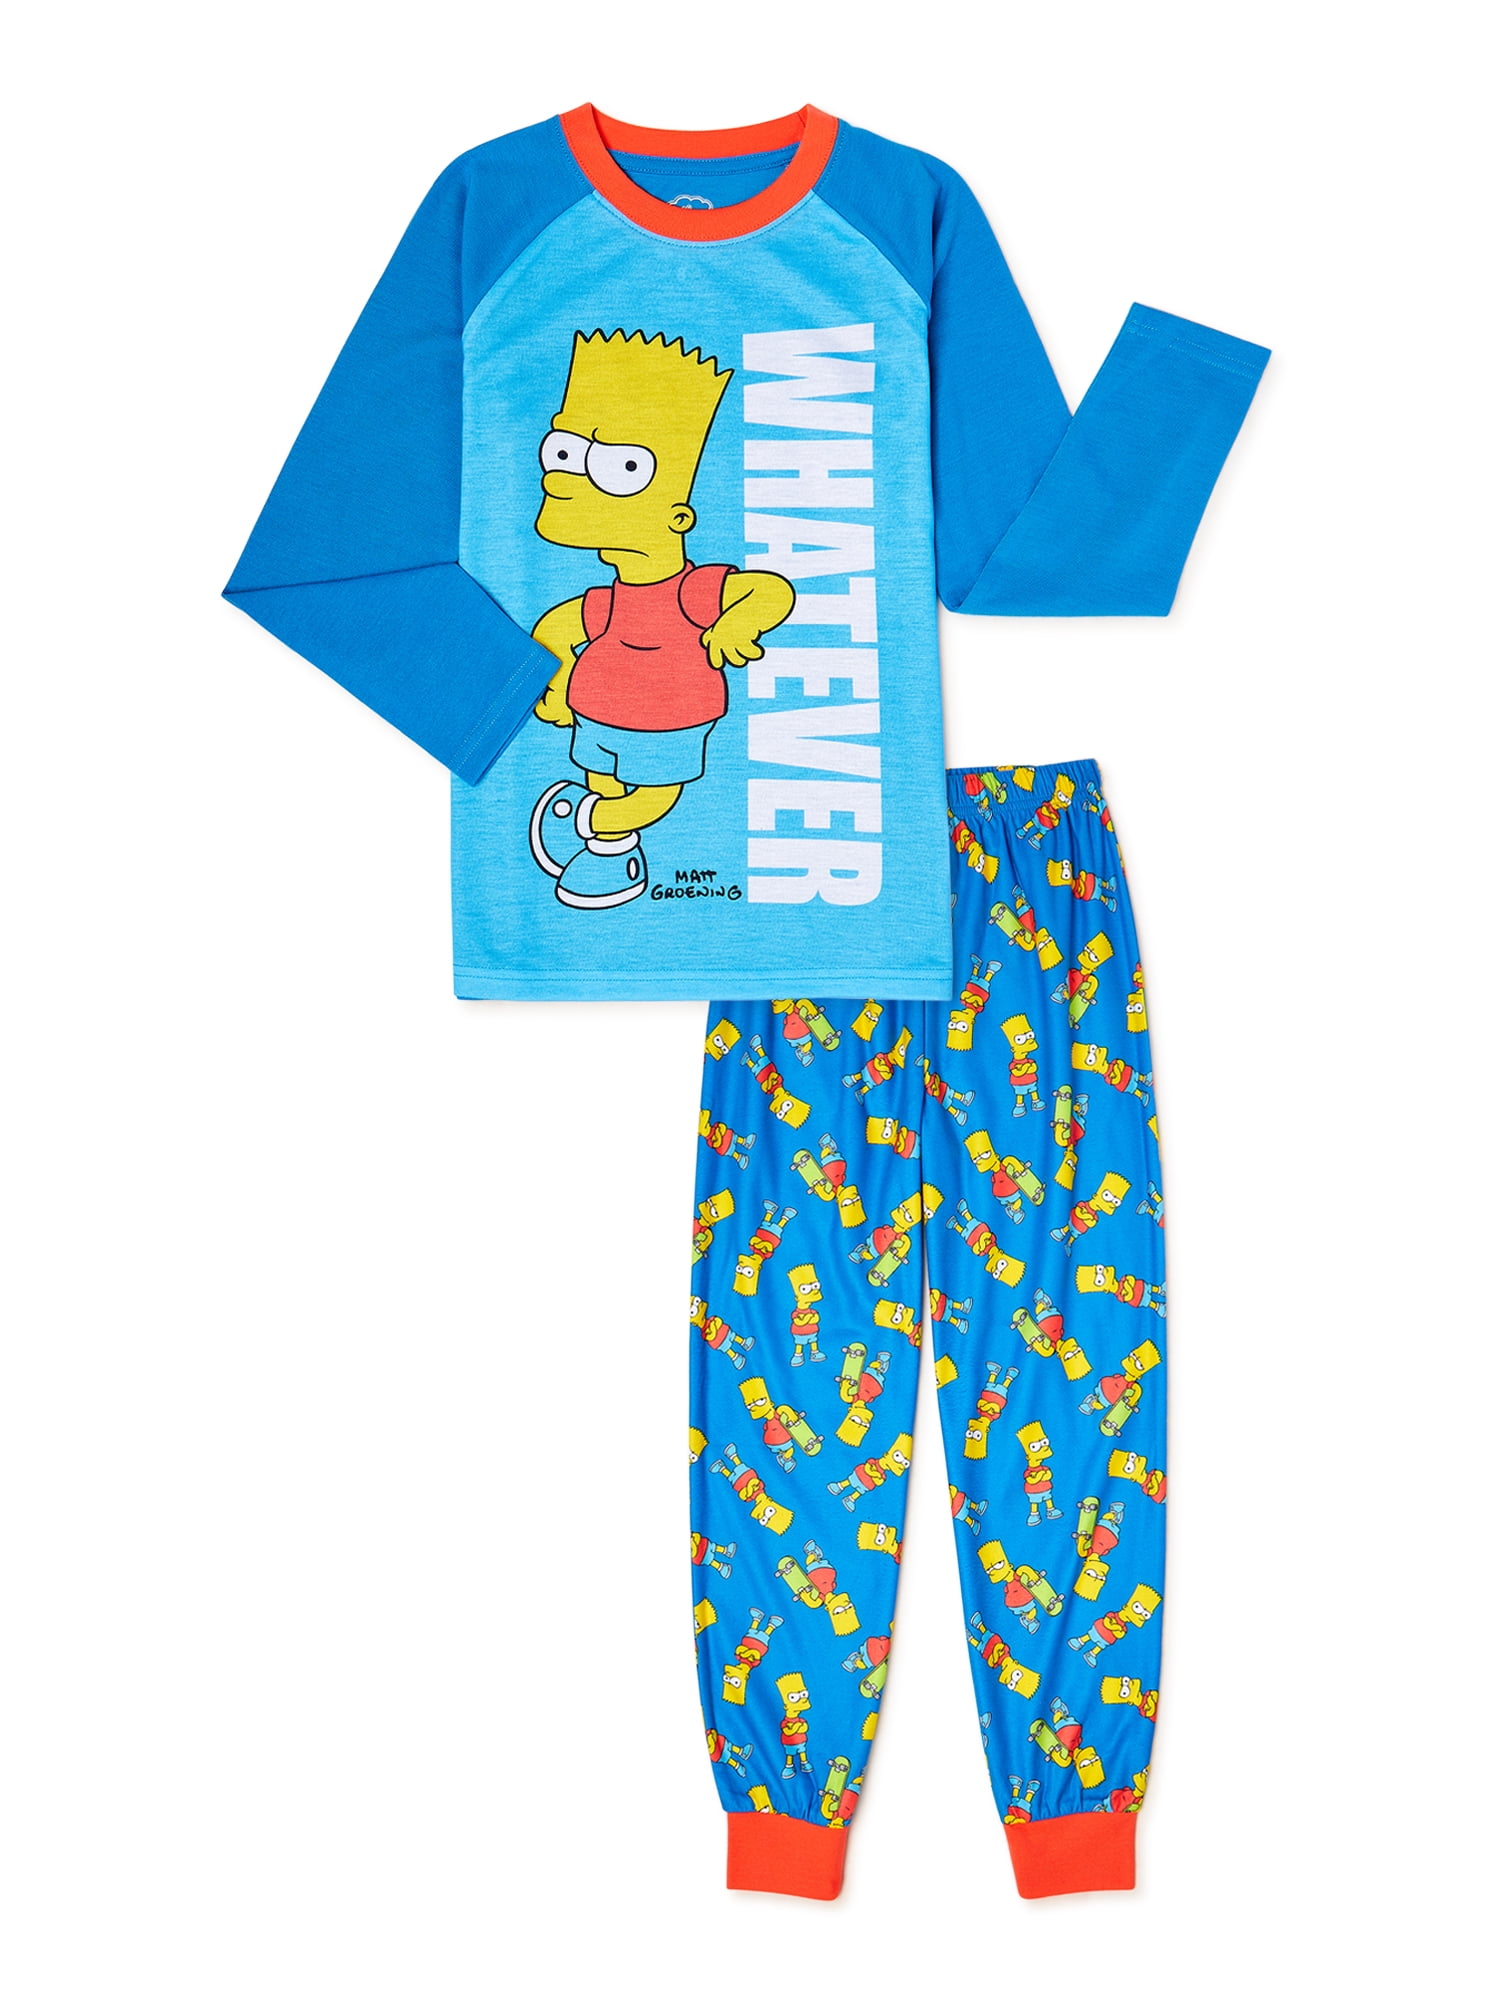 Bart Simpson Pyjamas Pjs Sleepwear Boys Age Official 4 to 10 Years Gift